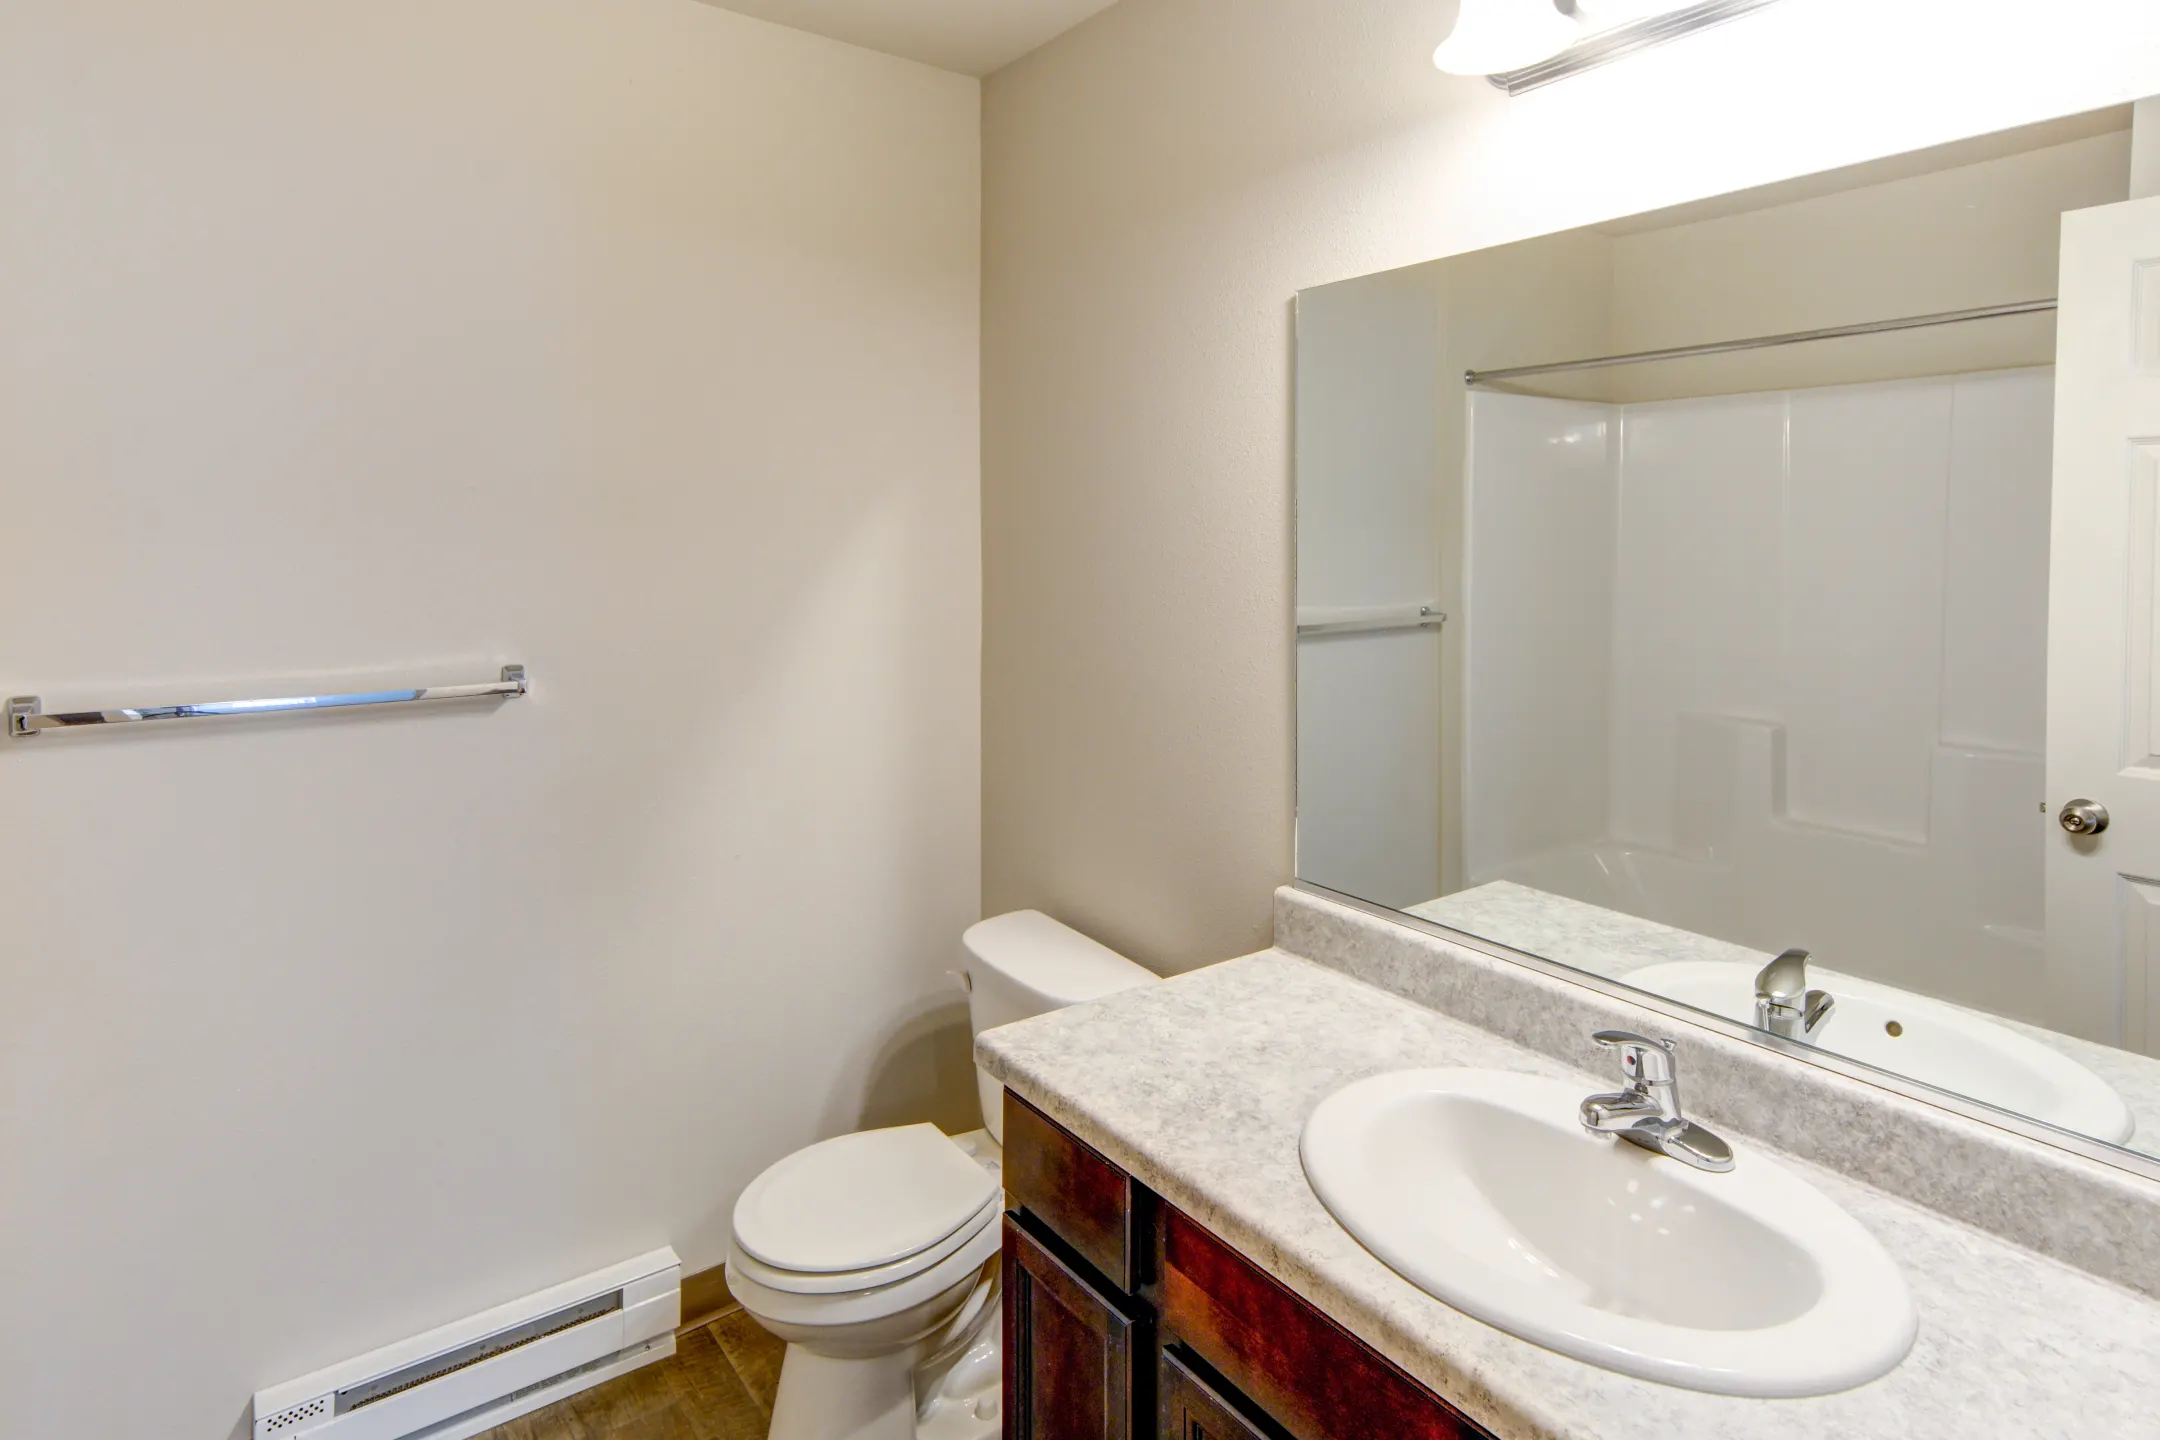 Bathroom - Crown Pointe Apartments - Post Falls, ID